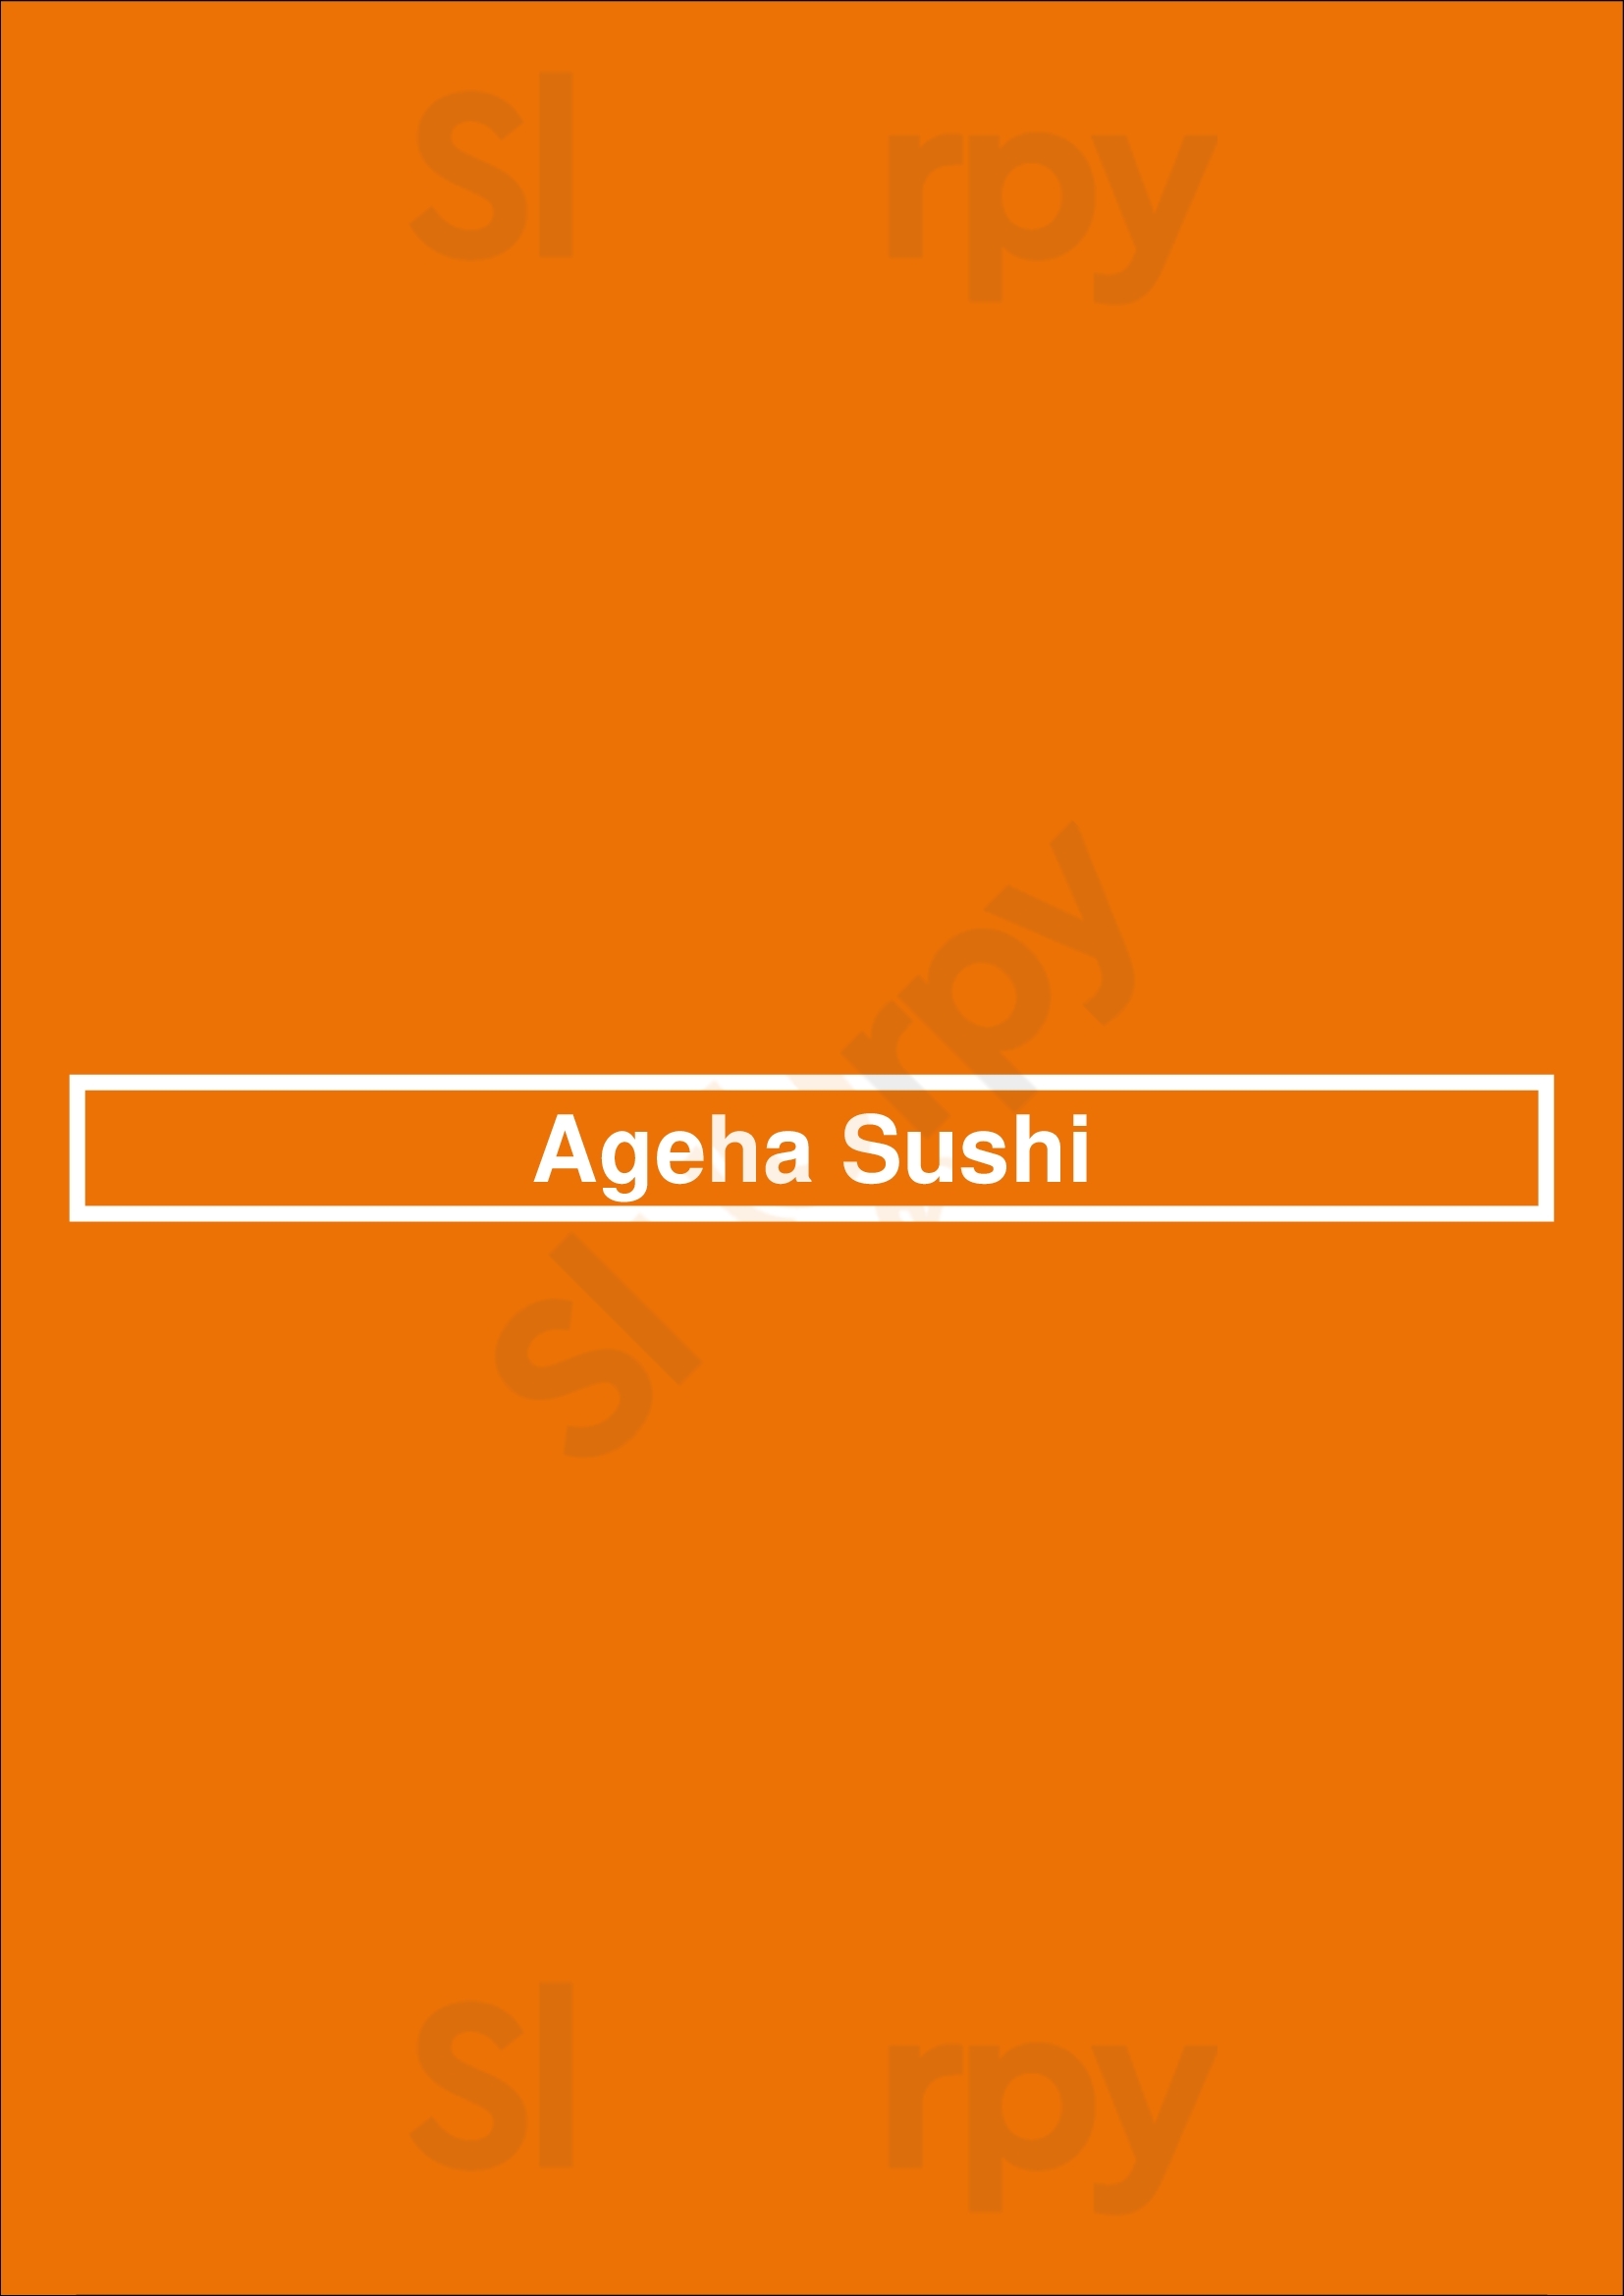 Ageha Sushi New York City Menu - 1